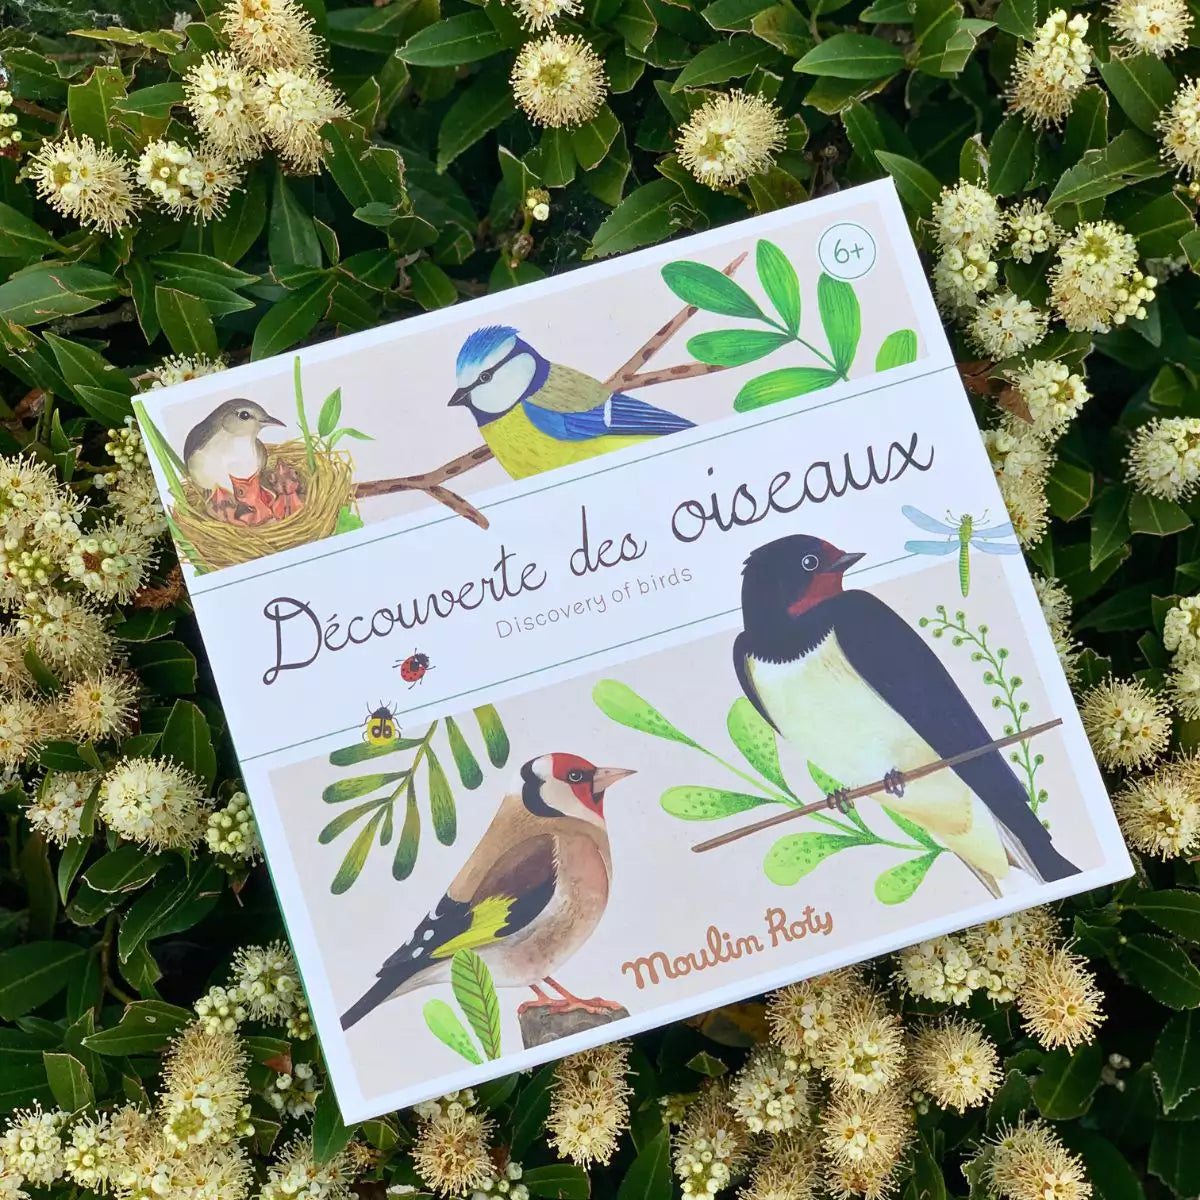 Moulin Roty Bird Discovery Box - Decrouverte des oiseaux